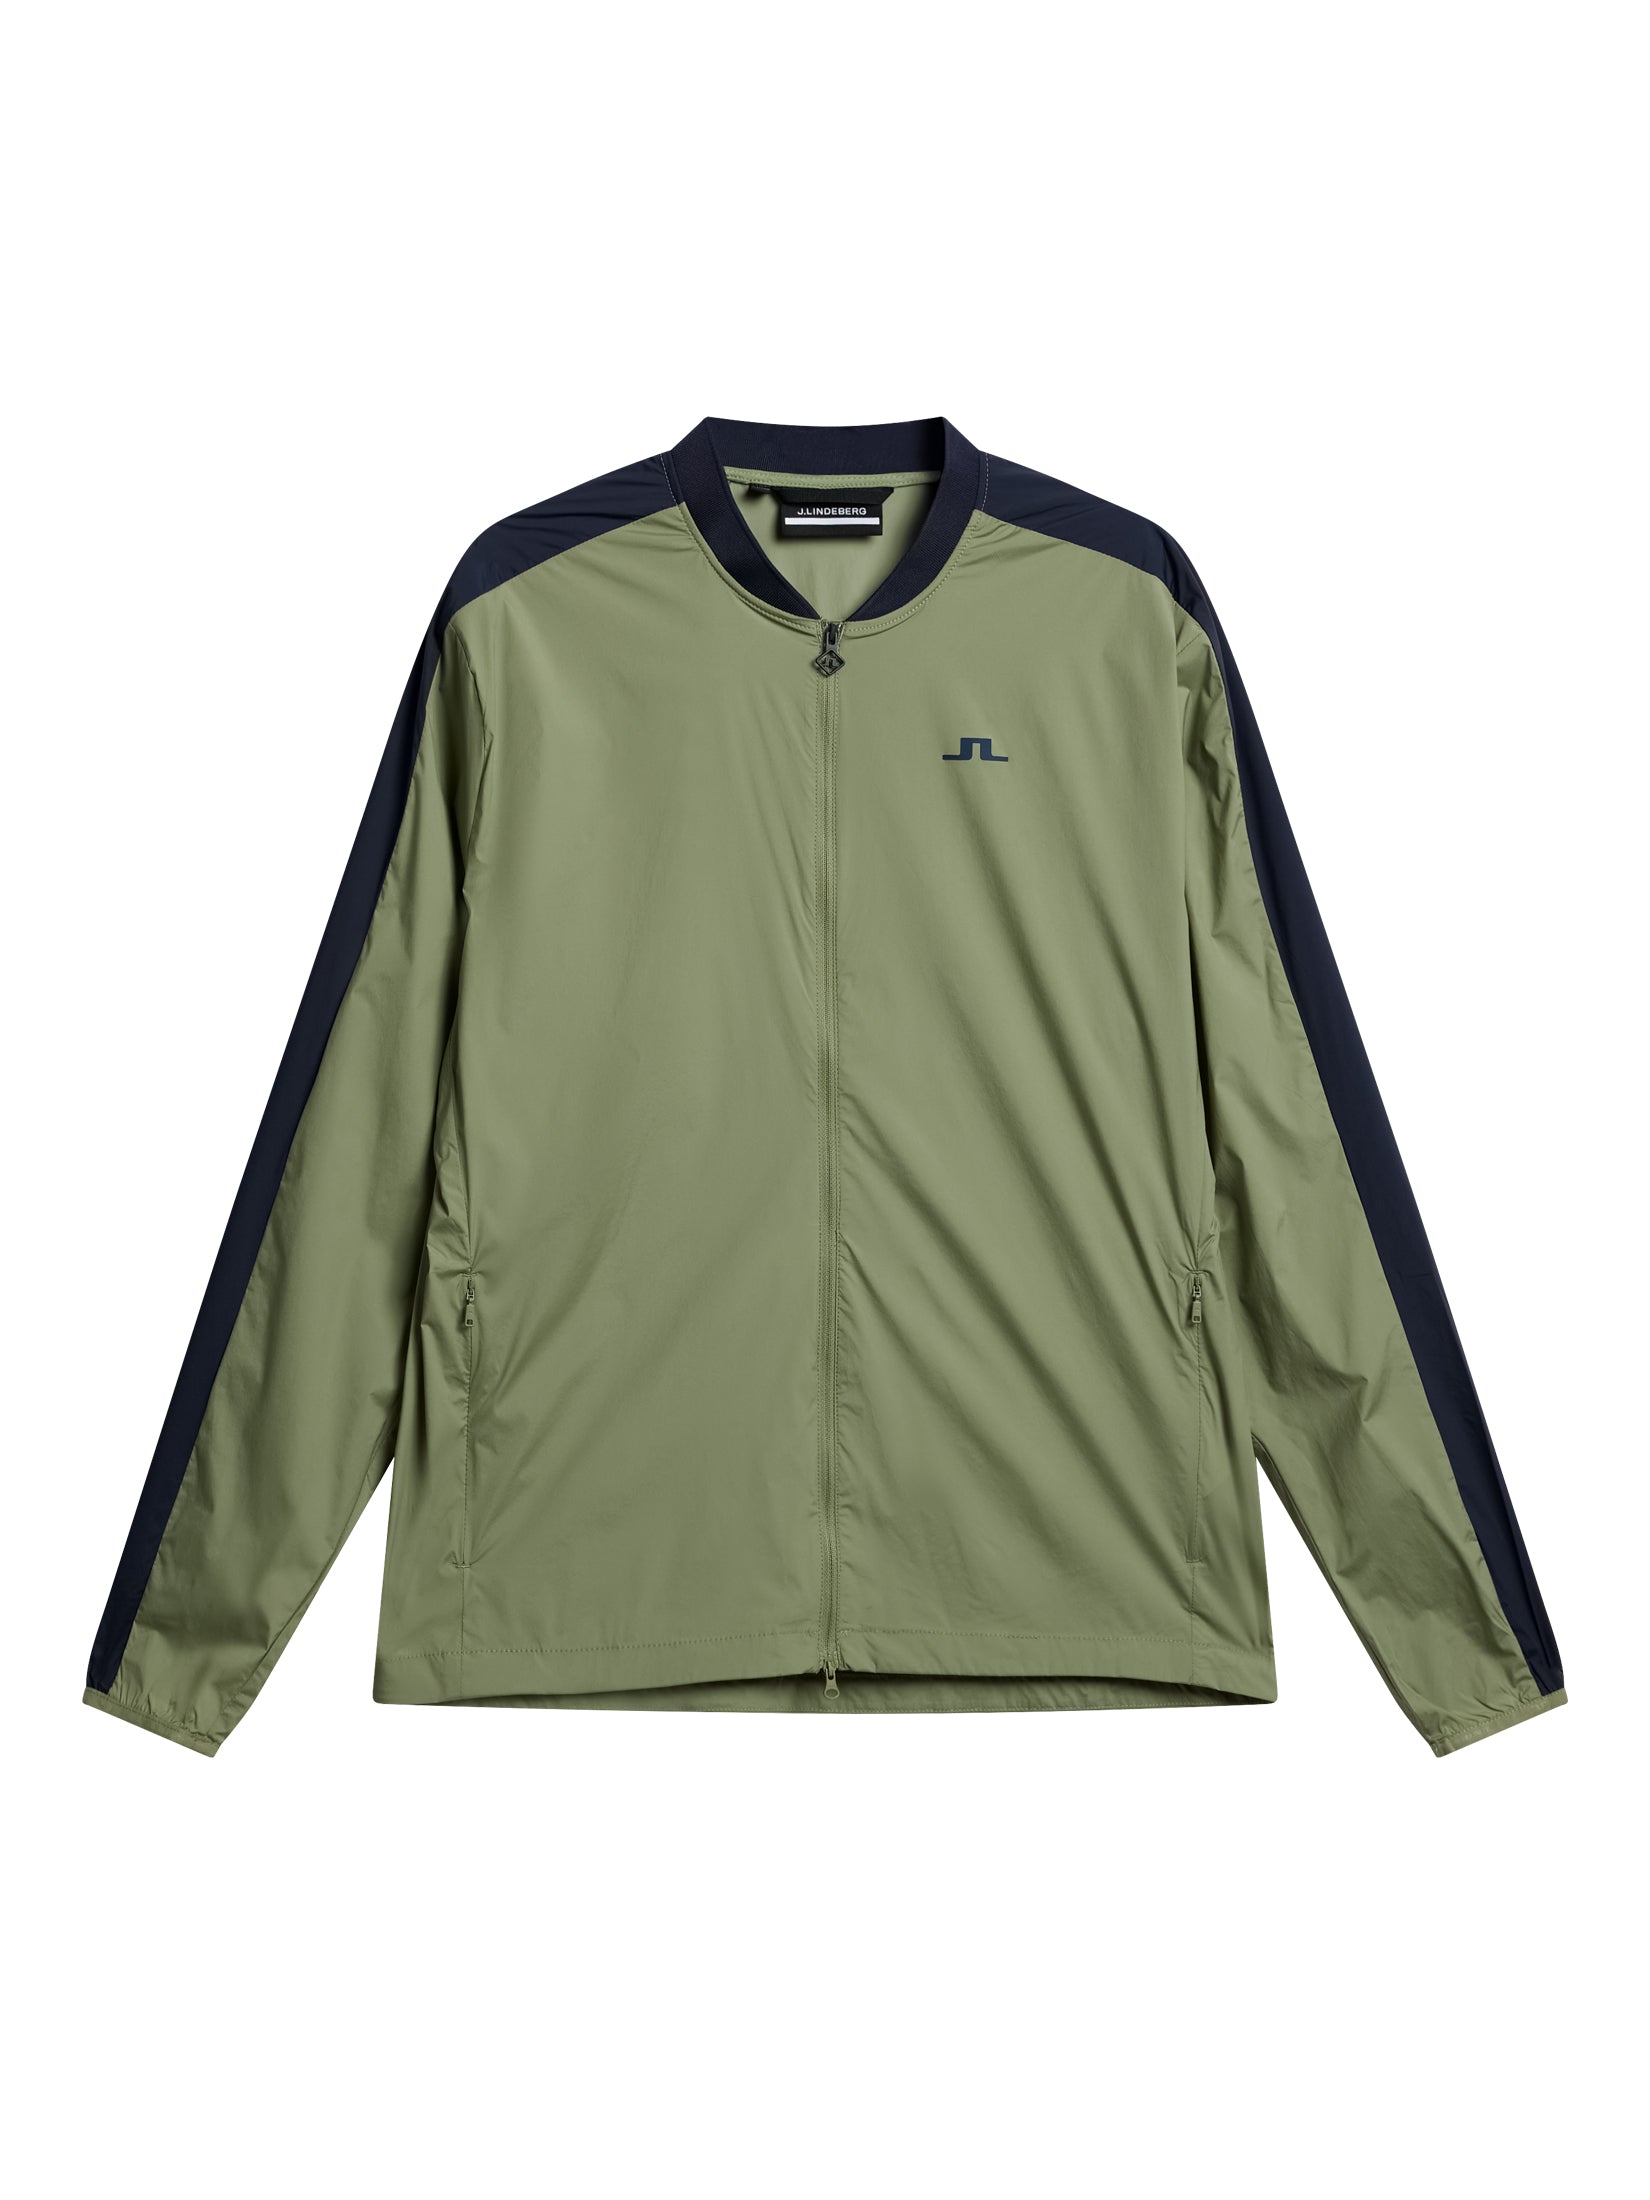 Stylish Golf Jackets for Men - J.Lindeberg